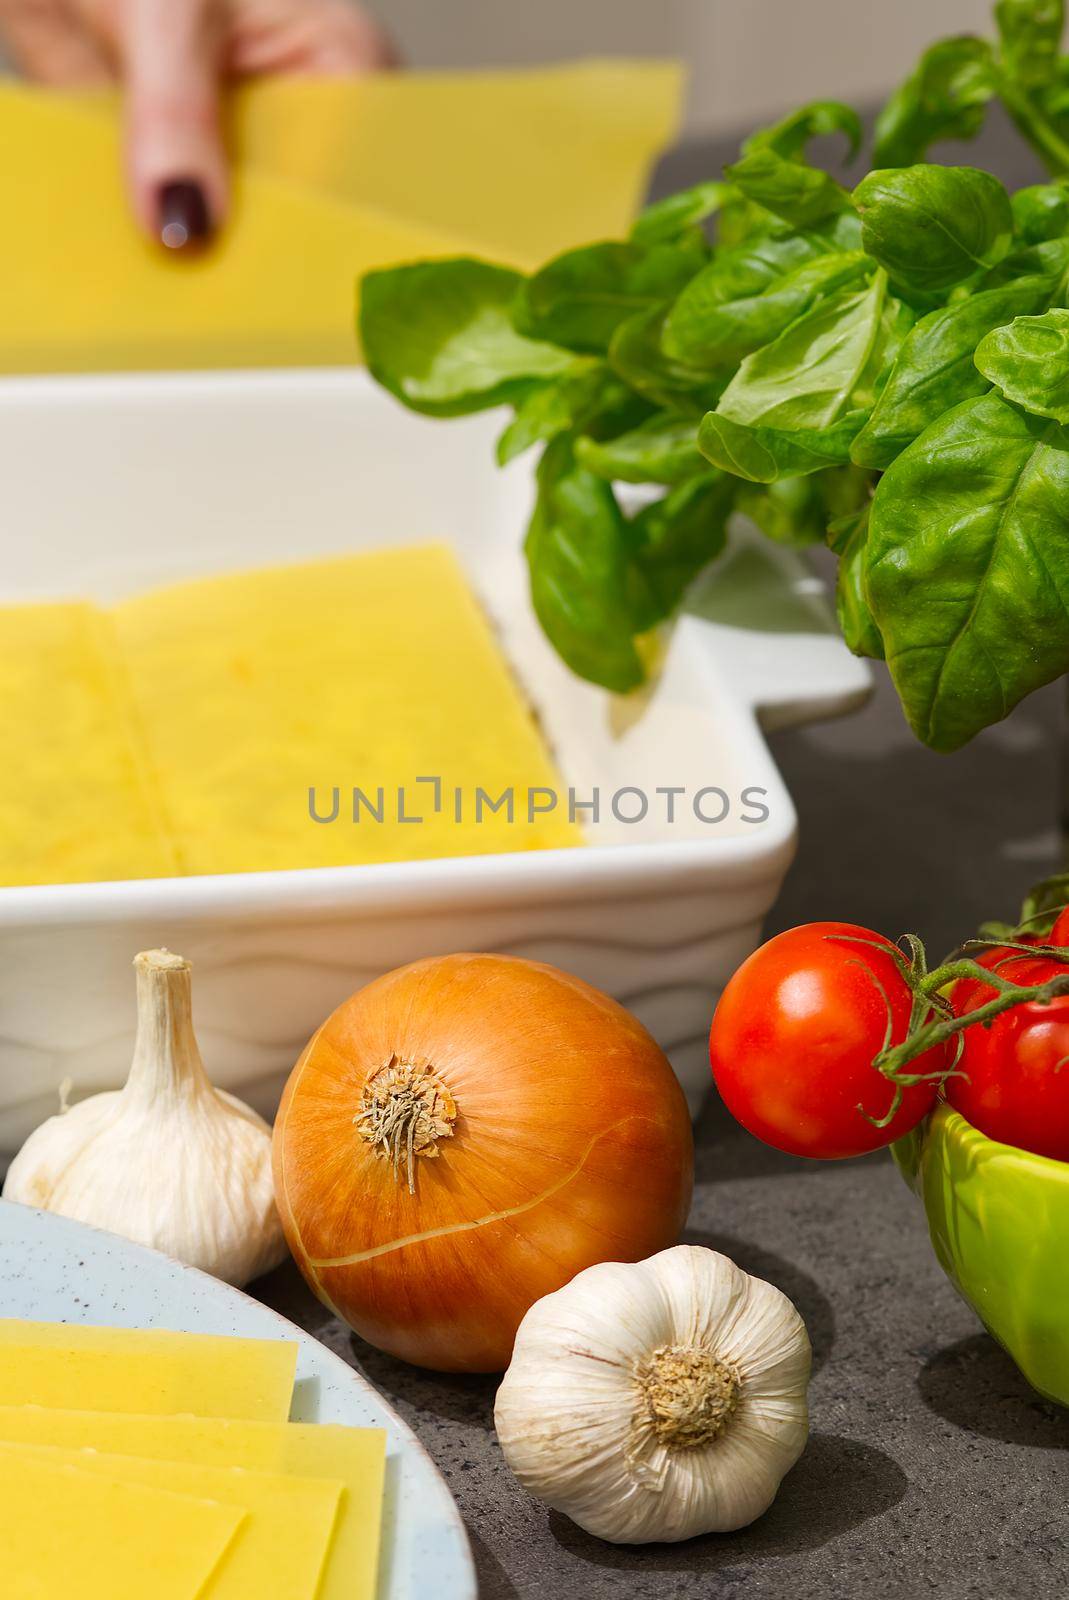 Woman preparing meat lasagna in kitchen. lasagna recipe - Italian food by PhotoTime